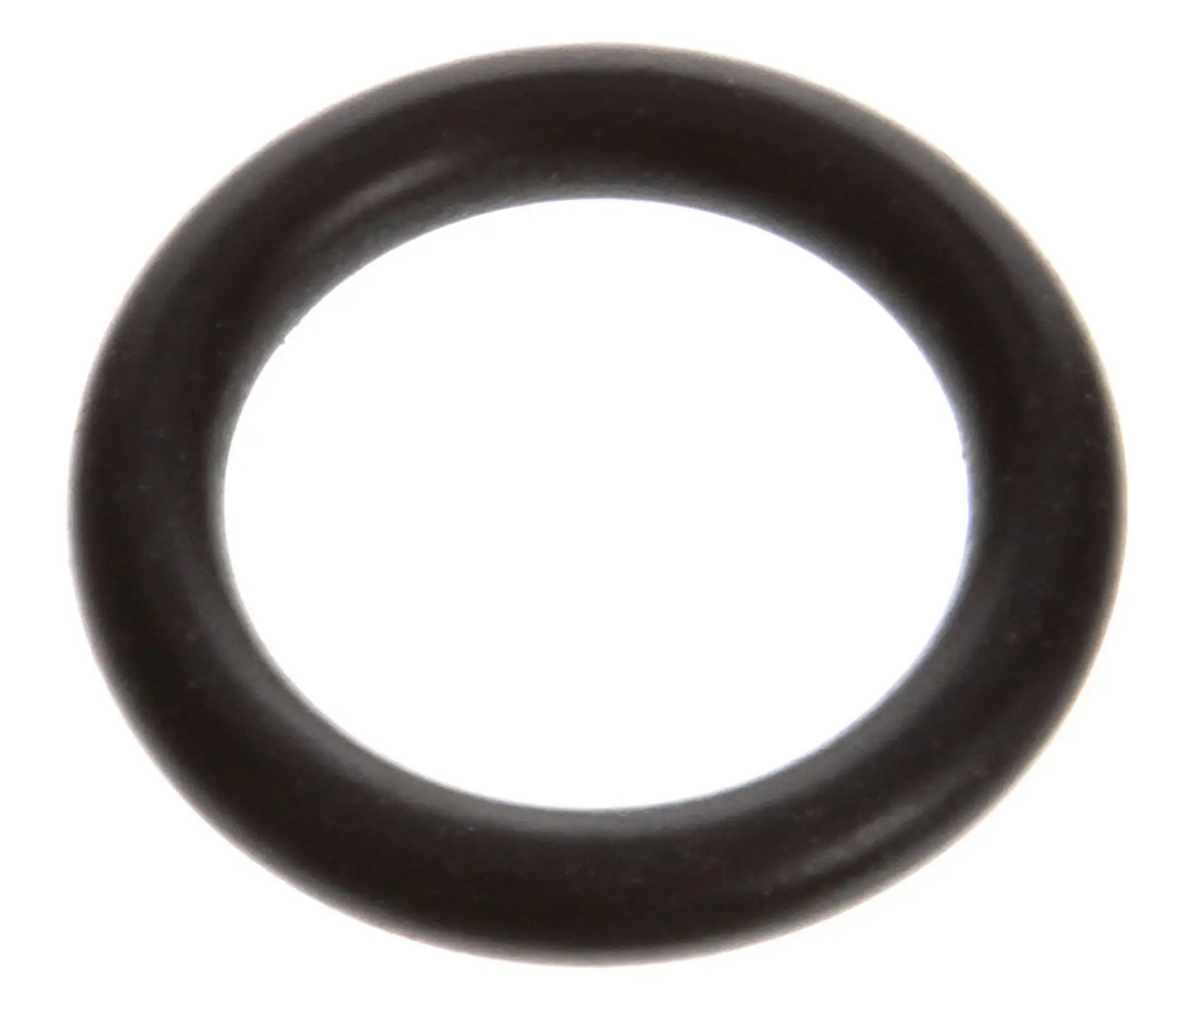 Crathco Tap Piston O-Rings, BLACK, 4 Pieces